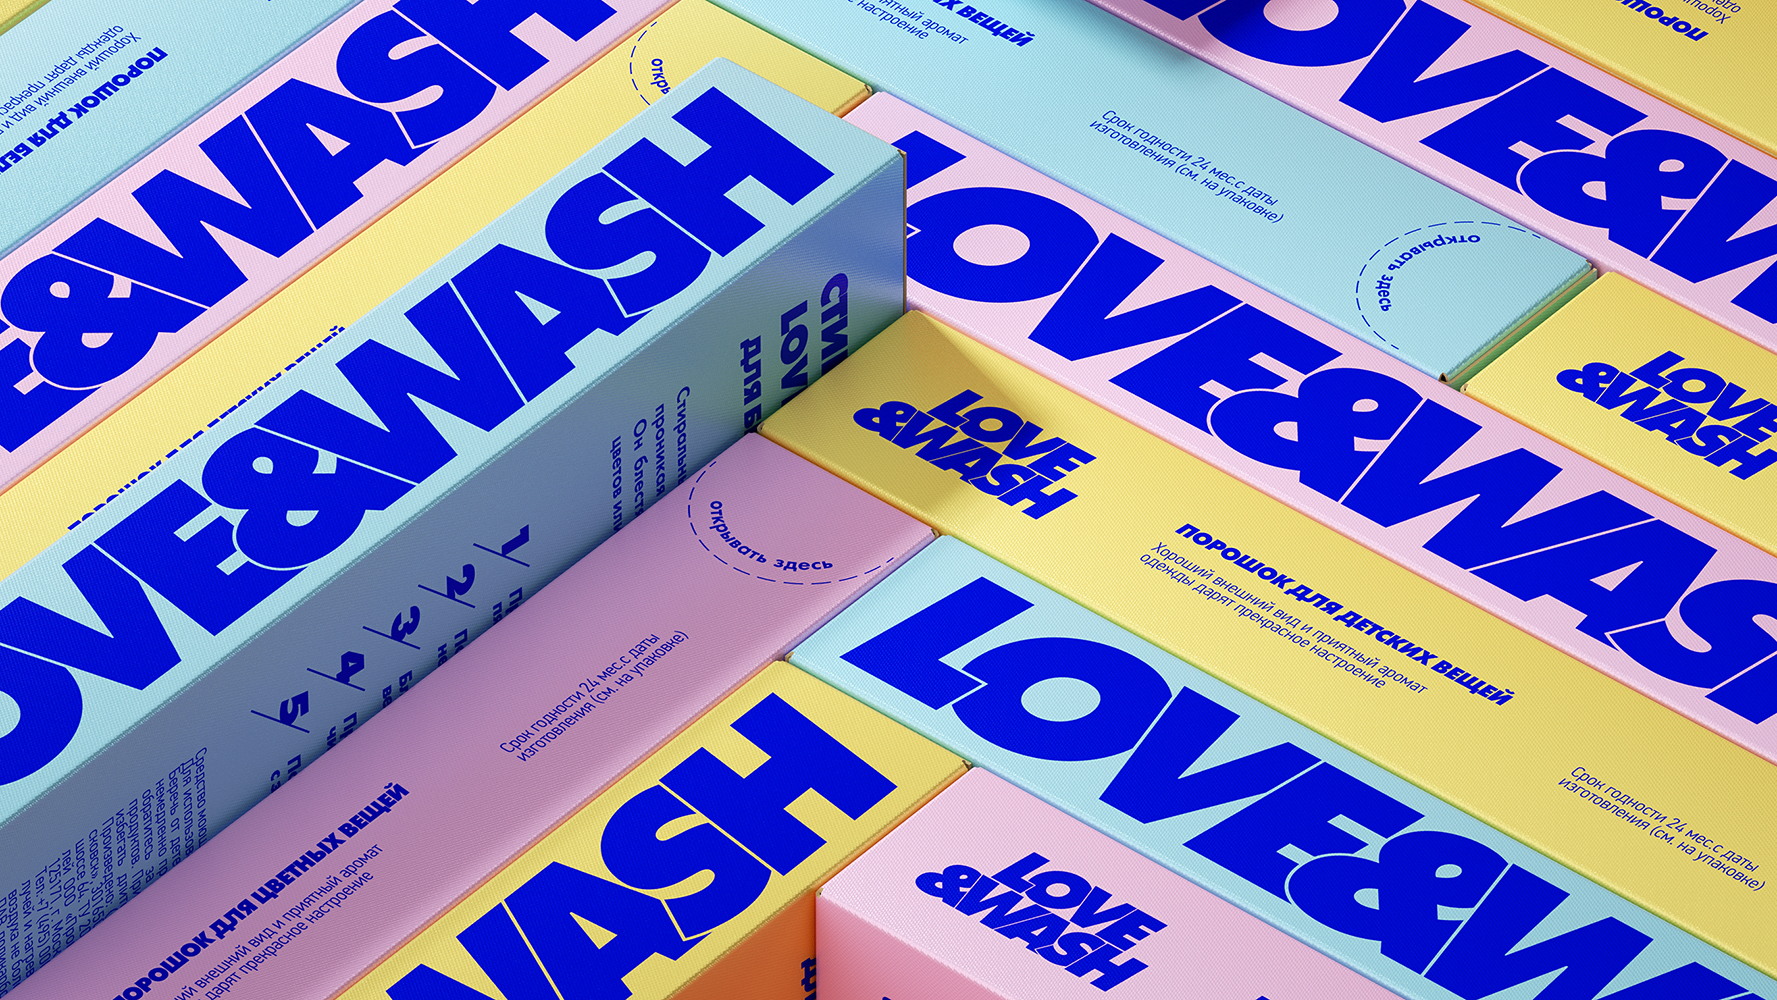 MUSE Design Winners - Love&wash